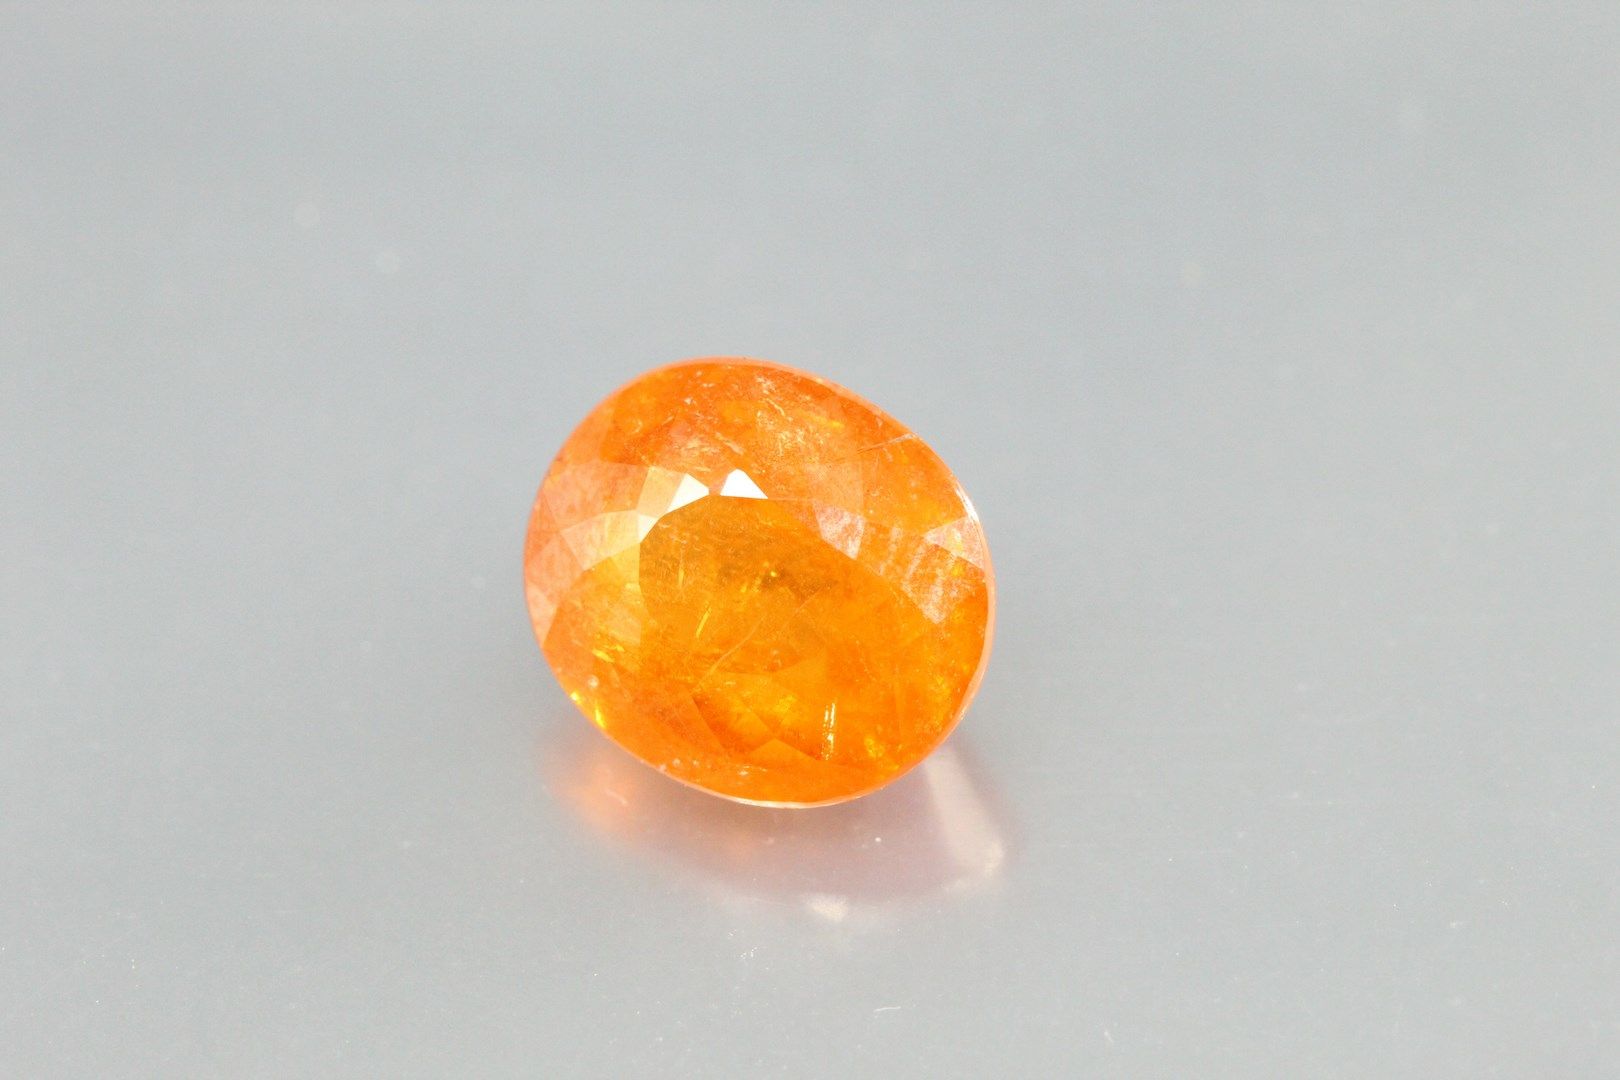 Null Zafiro naranja ovalado sobre papel.

Peso: 4,30 cts. 

Incluye.